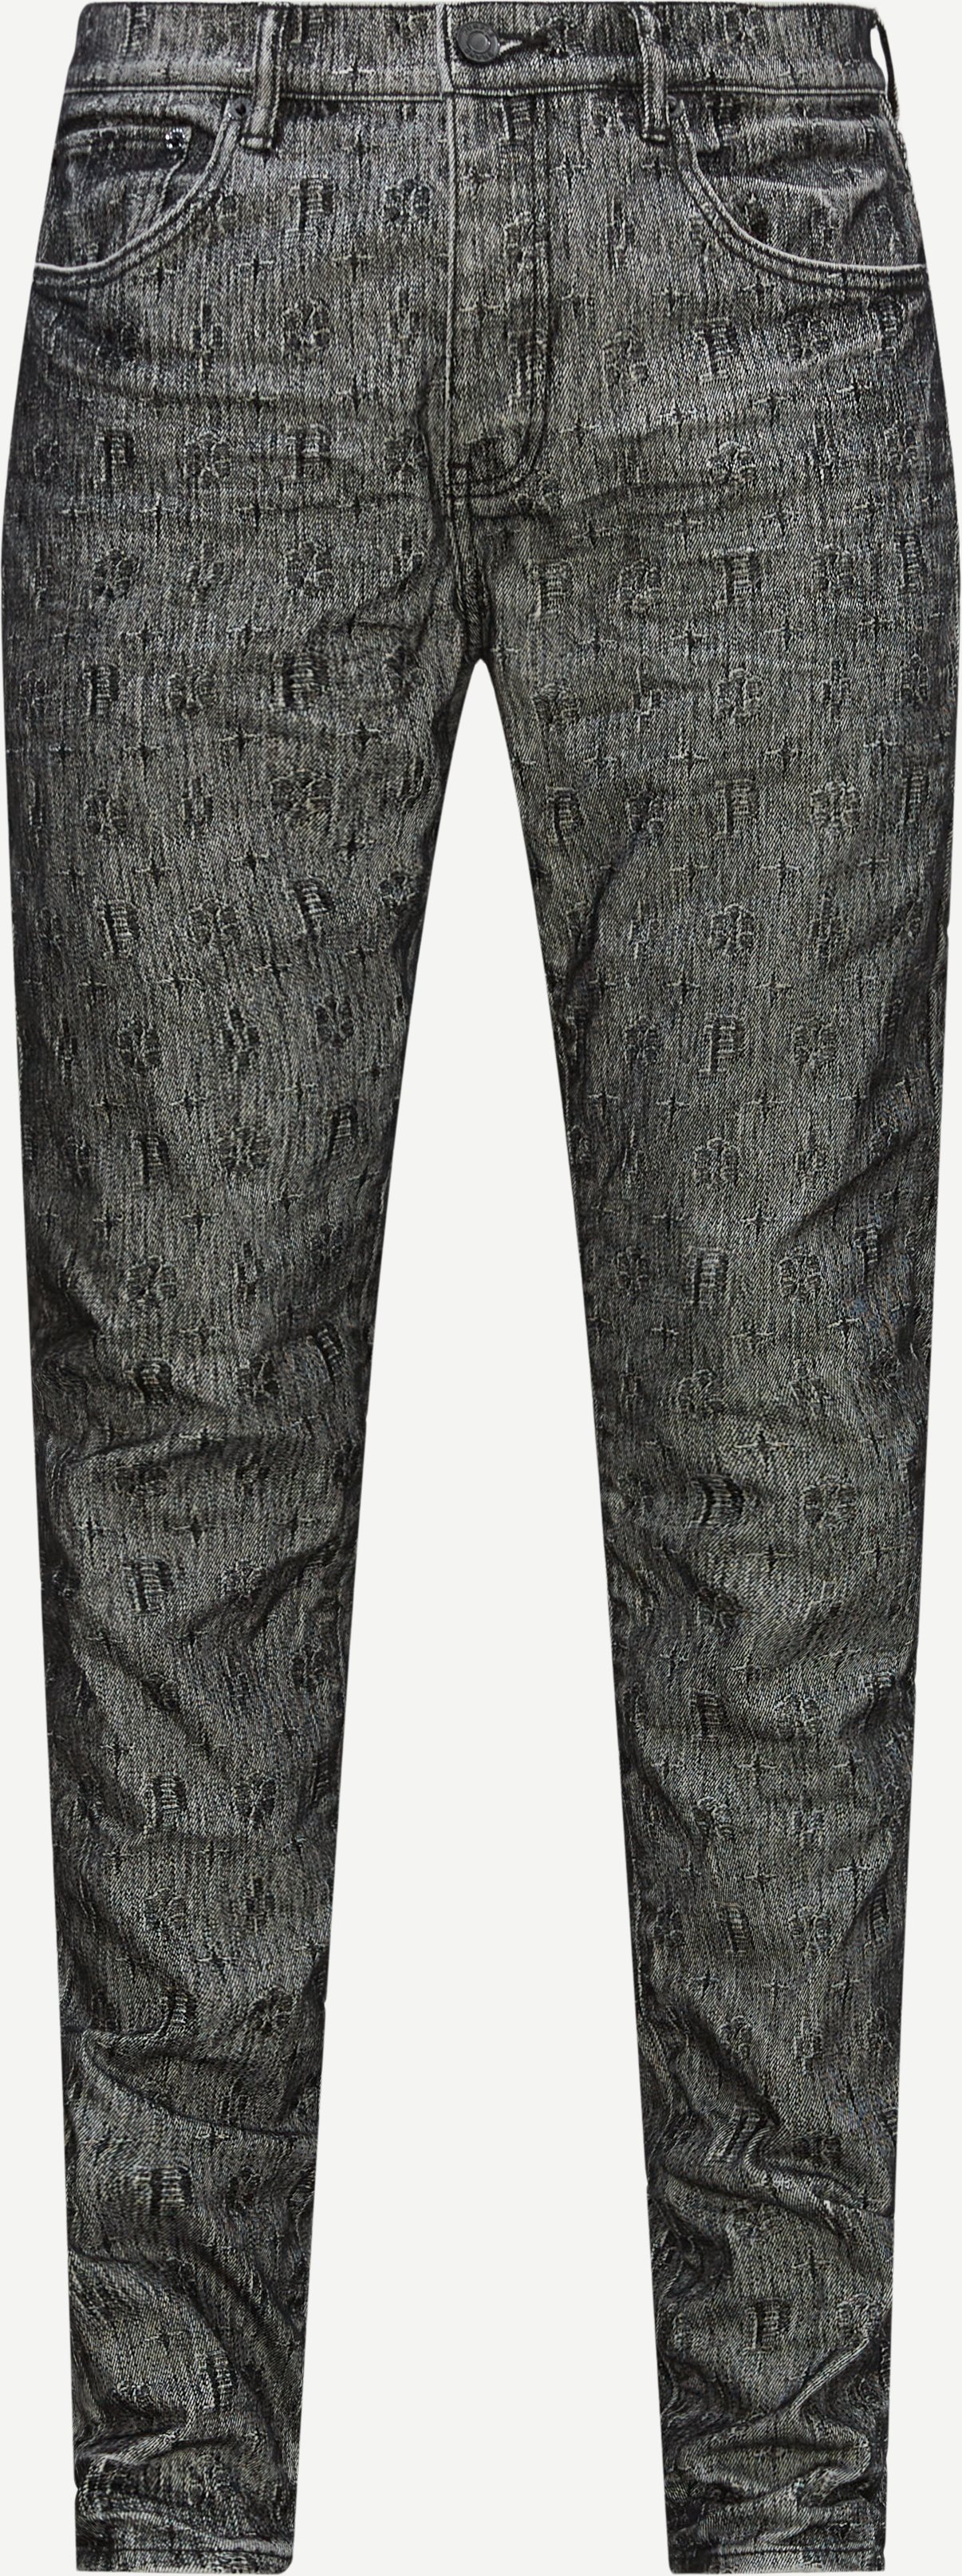 PURPLE Jeans P001-WMBF123 Black